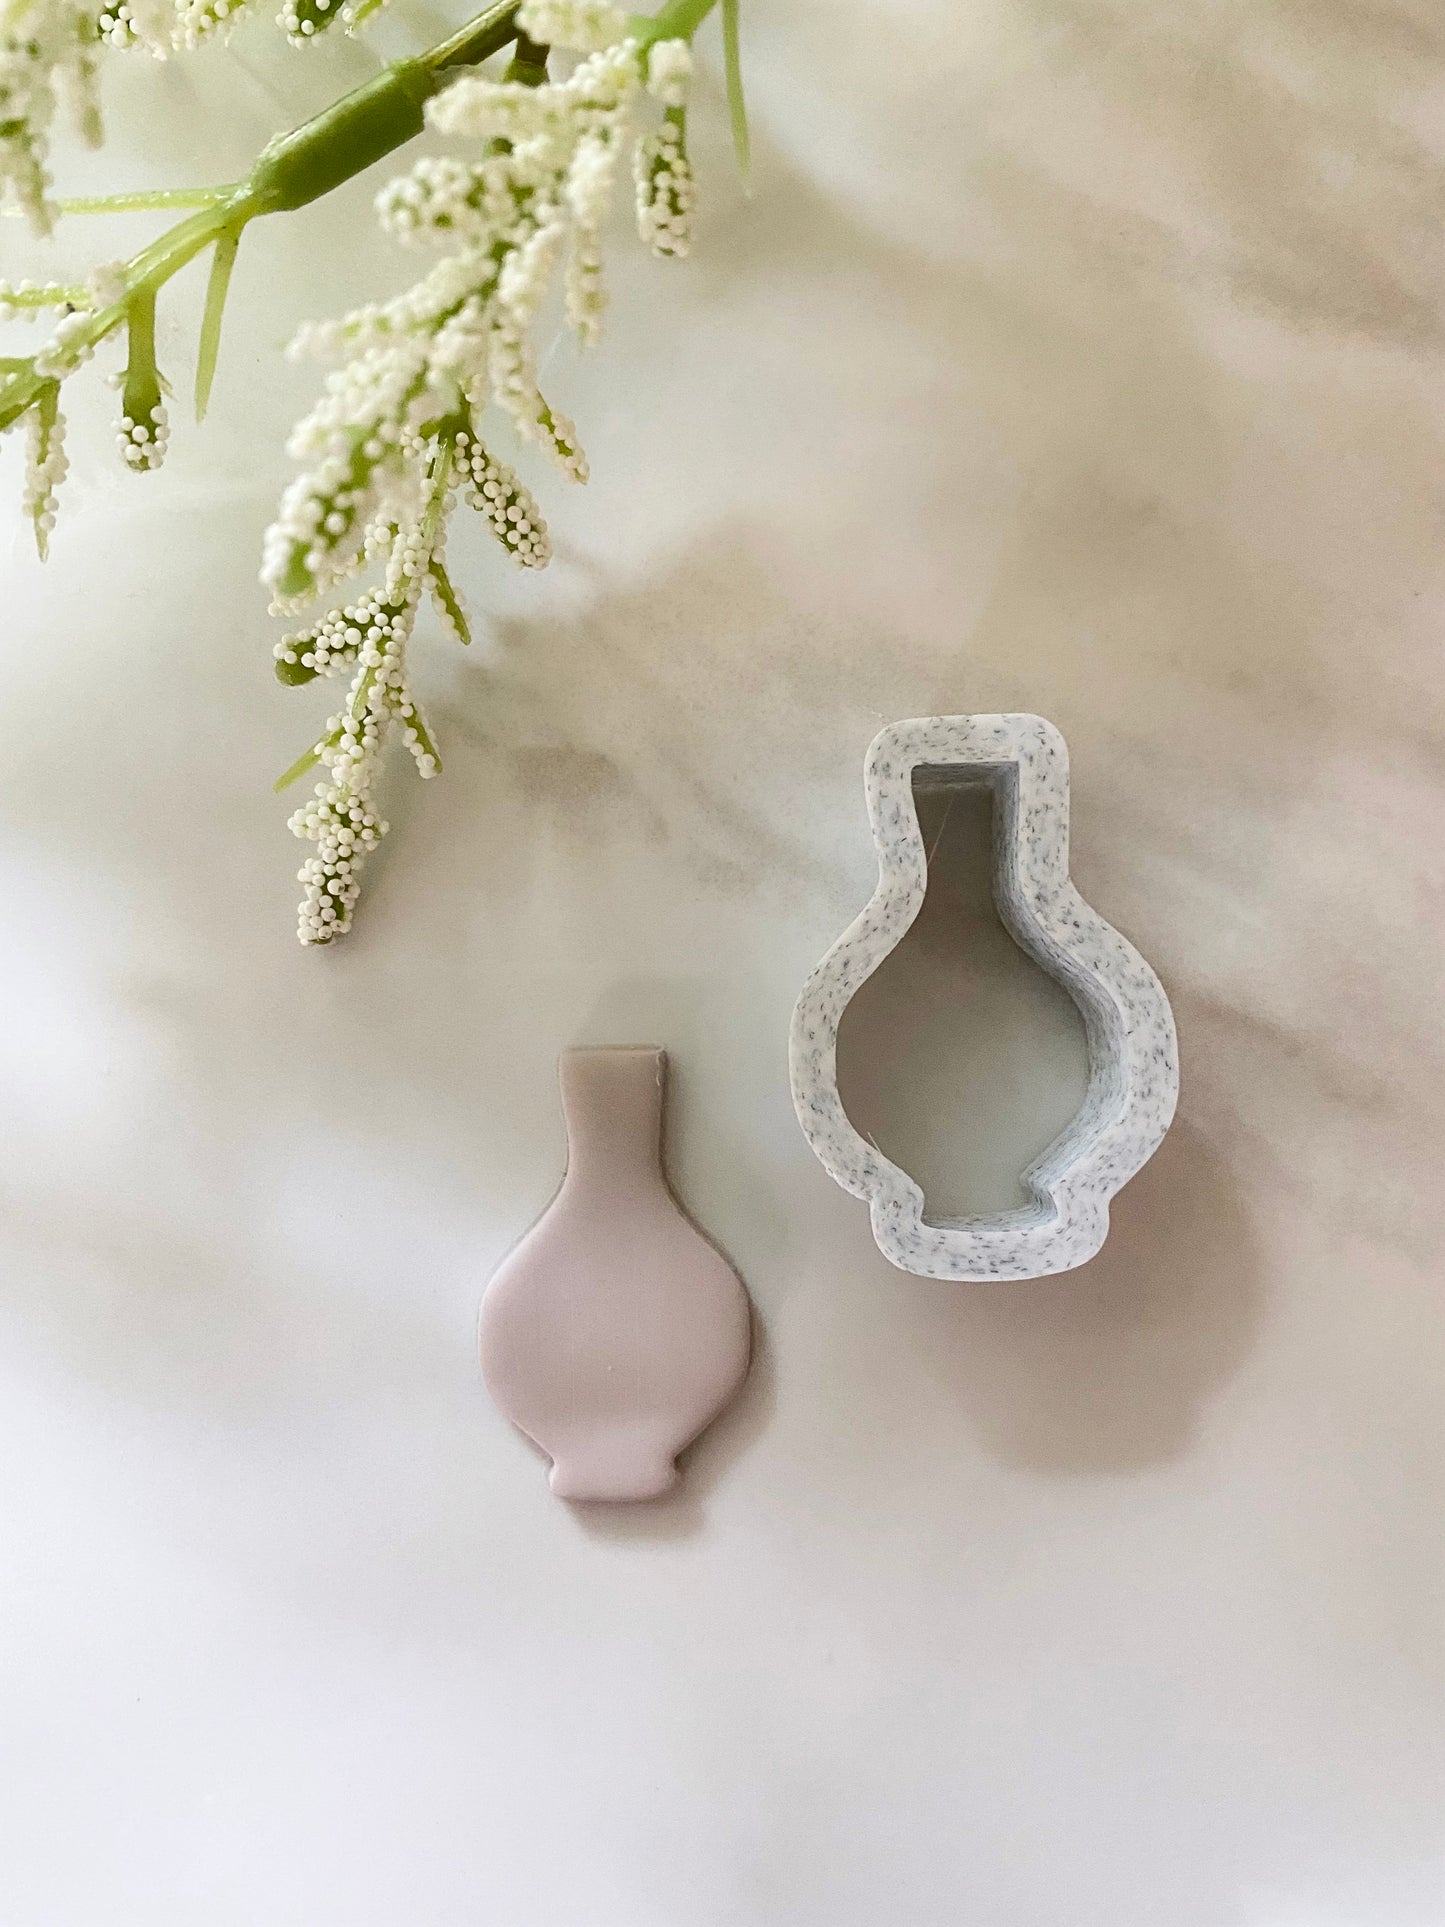 Vase #2 - Polymer Clay Cutter